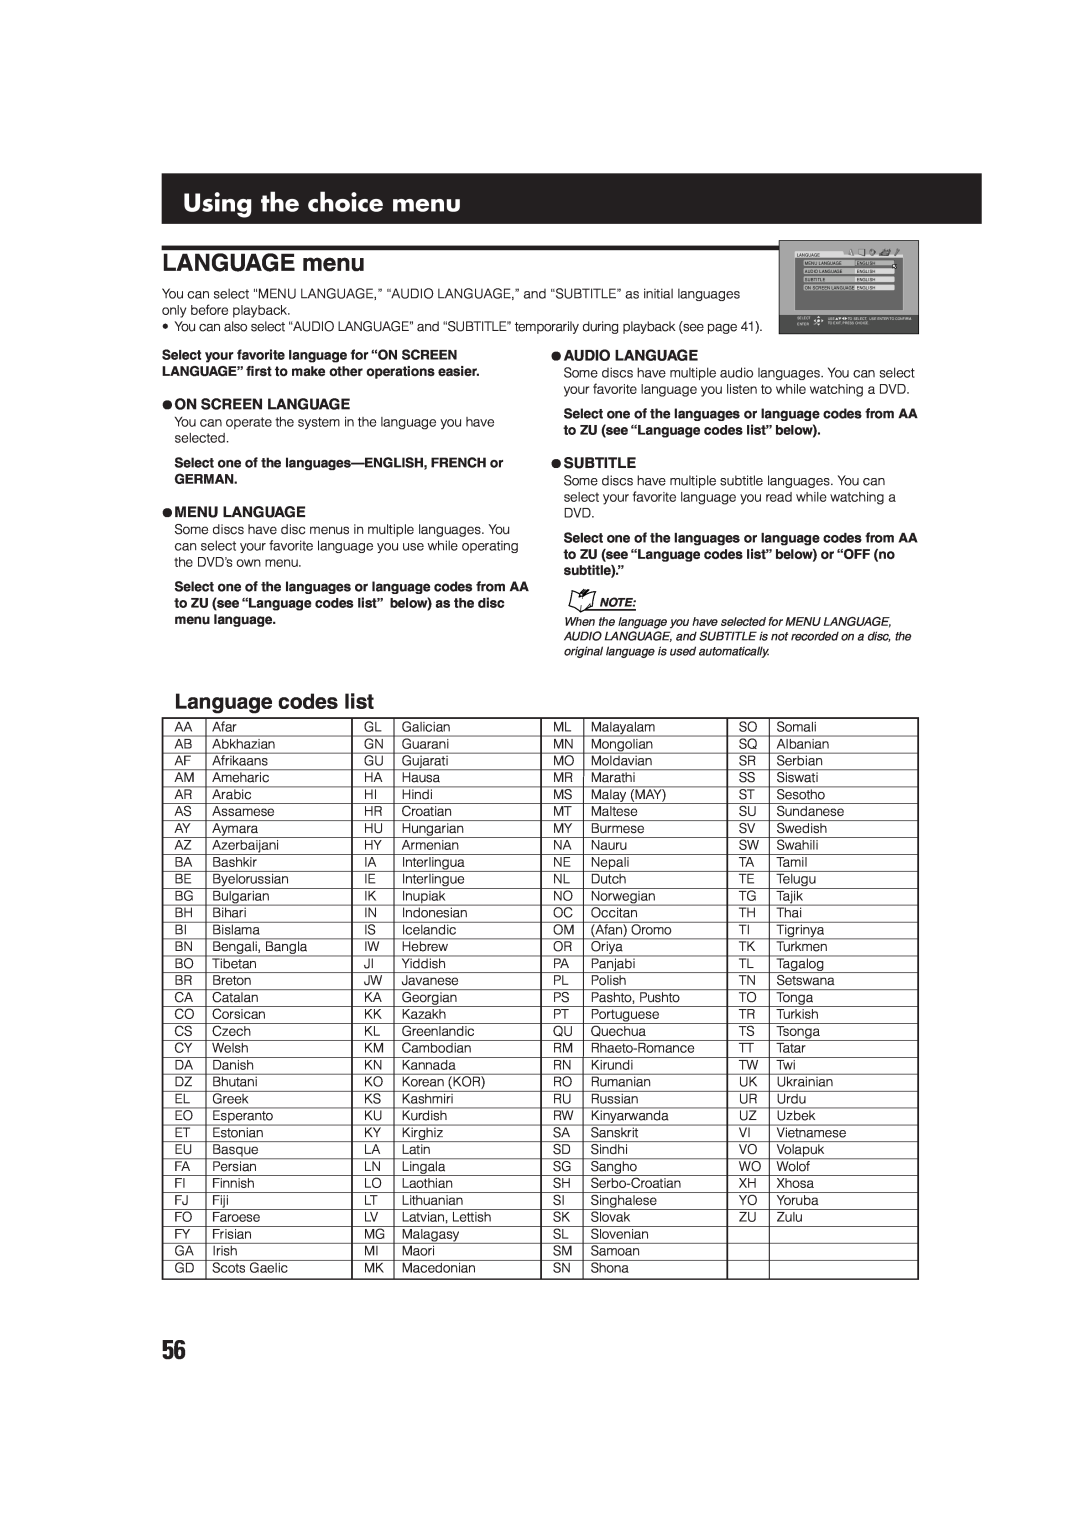 JVC TH-A75R Using the choice menu, LANGUAGE menu, Language codes list, ¶Audio Language, ¶On Screen Language, ¶Subtitle 